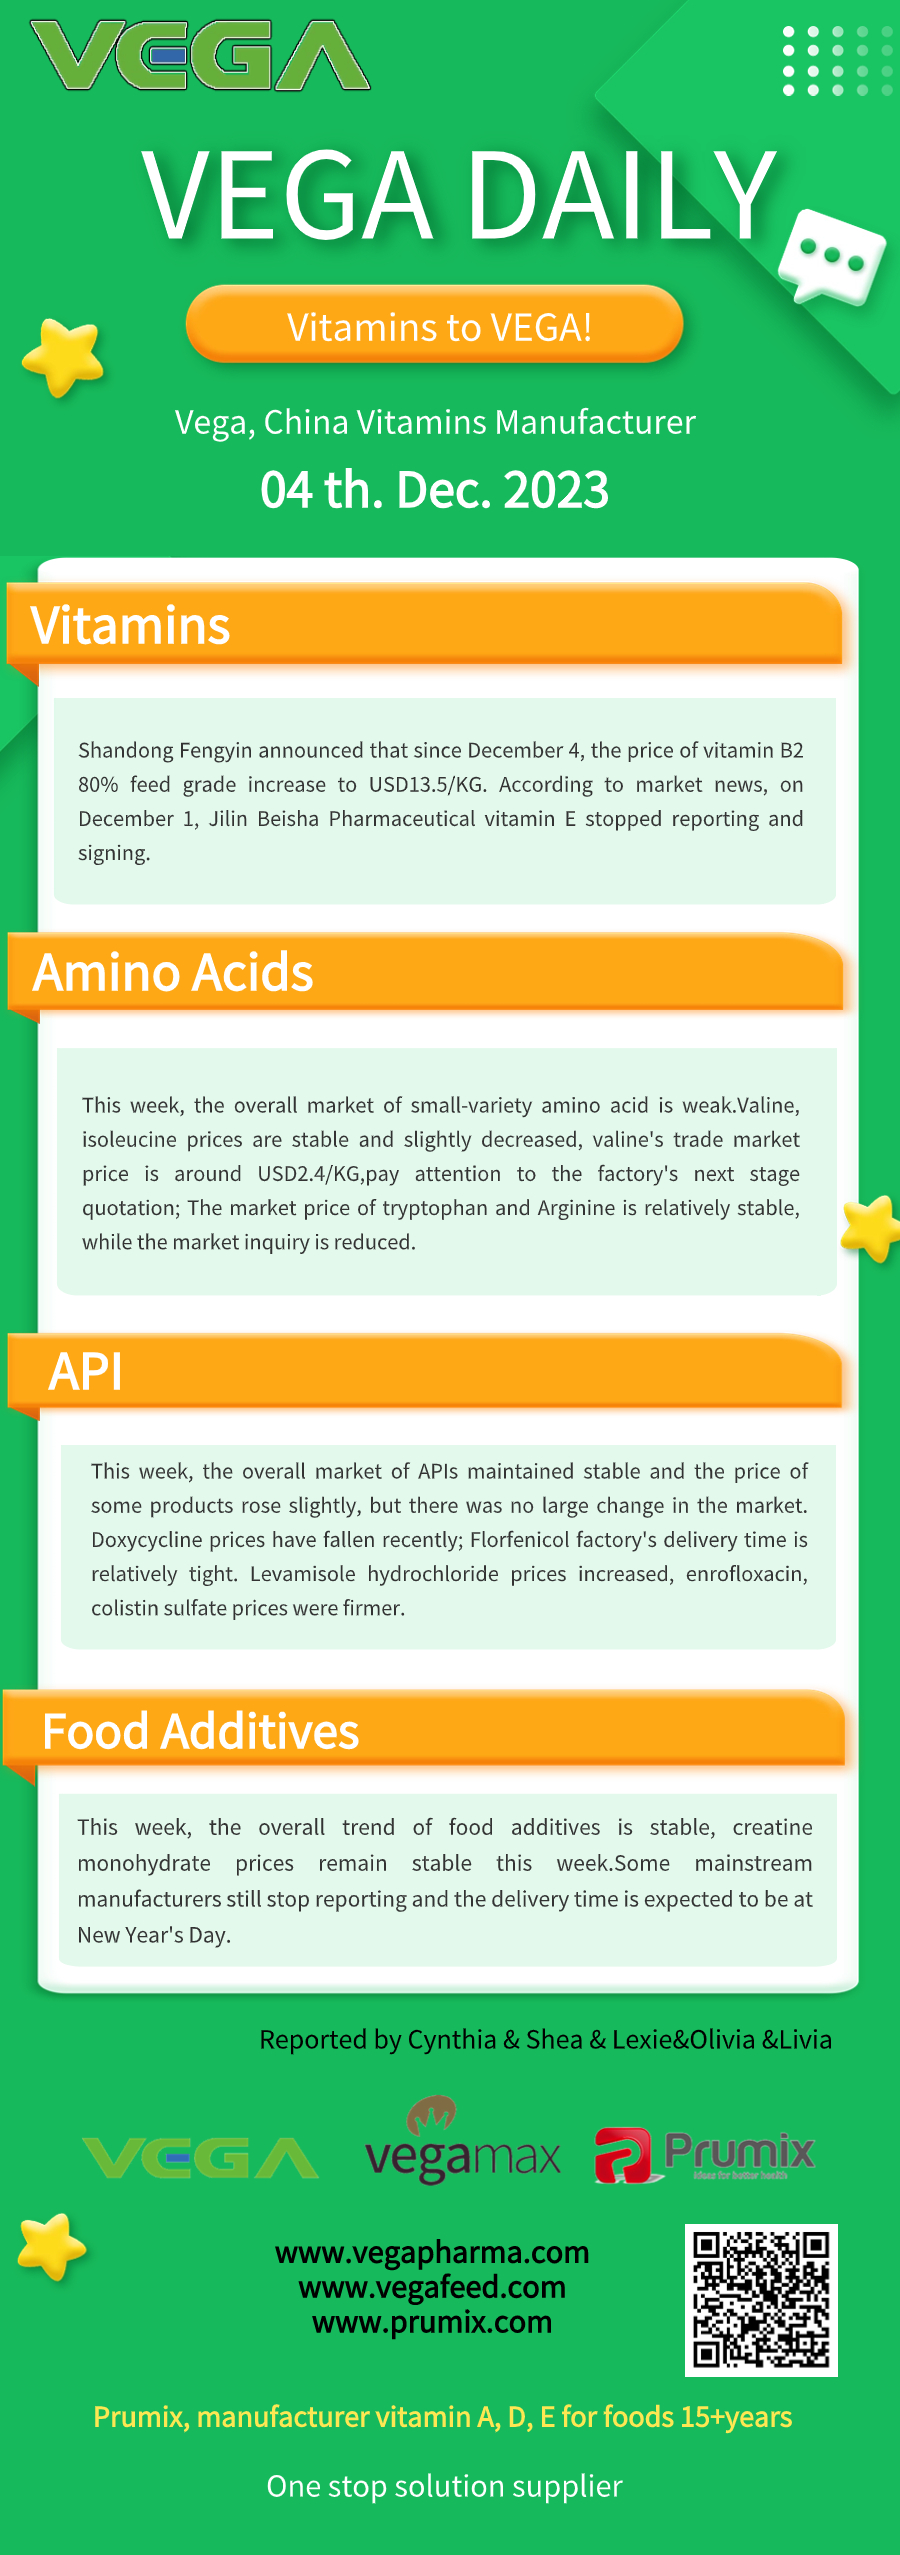 Vega Daily Dated on Dec 4th 2023 Vitamin Amino Acid APl Food Additives.jpg